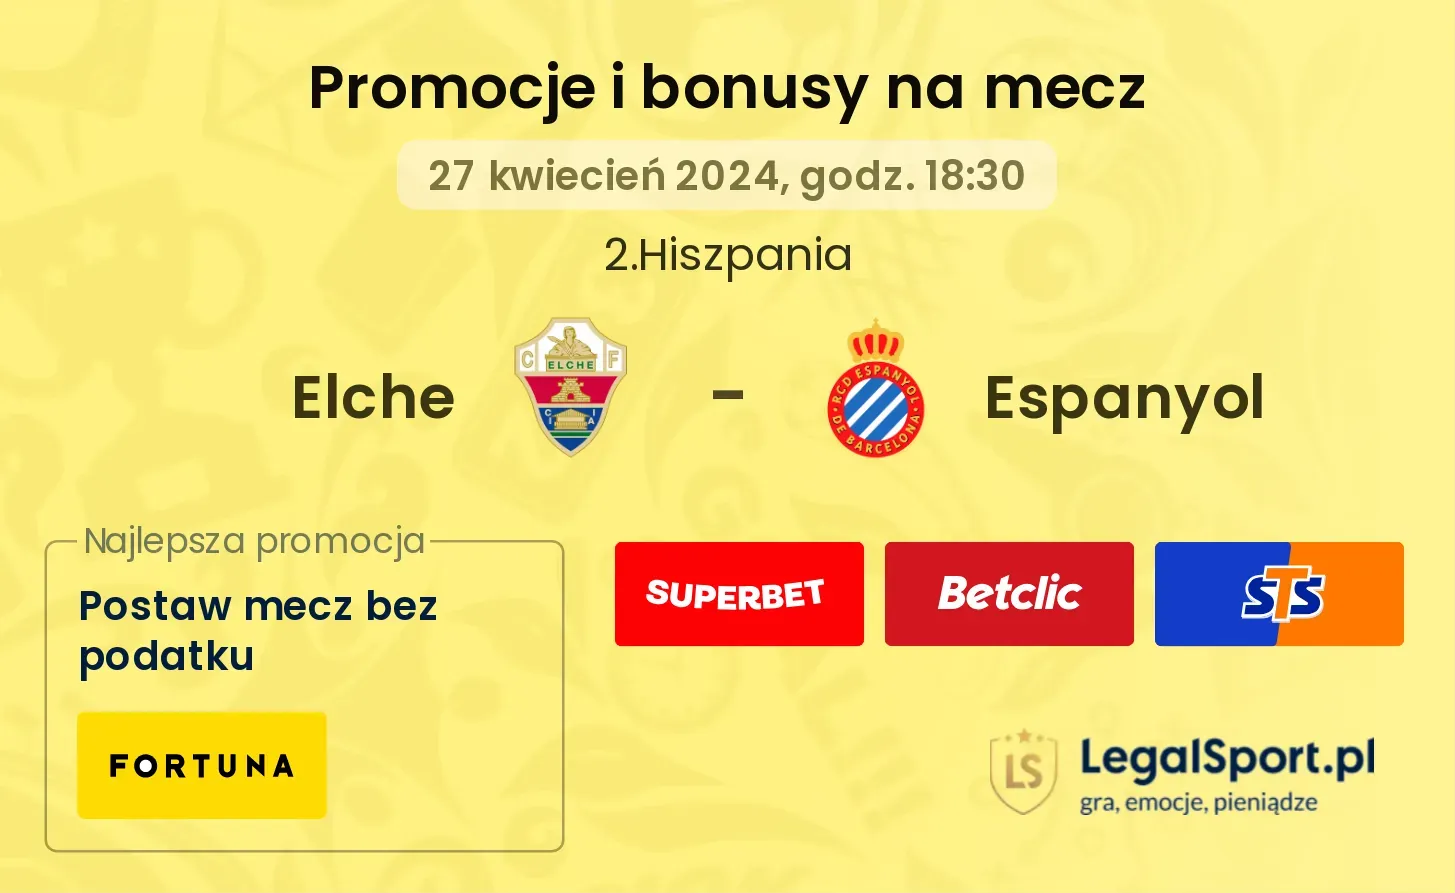 Elche - Espanyol promocje bonusy na mecz